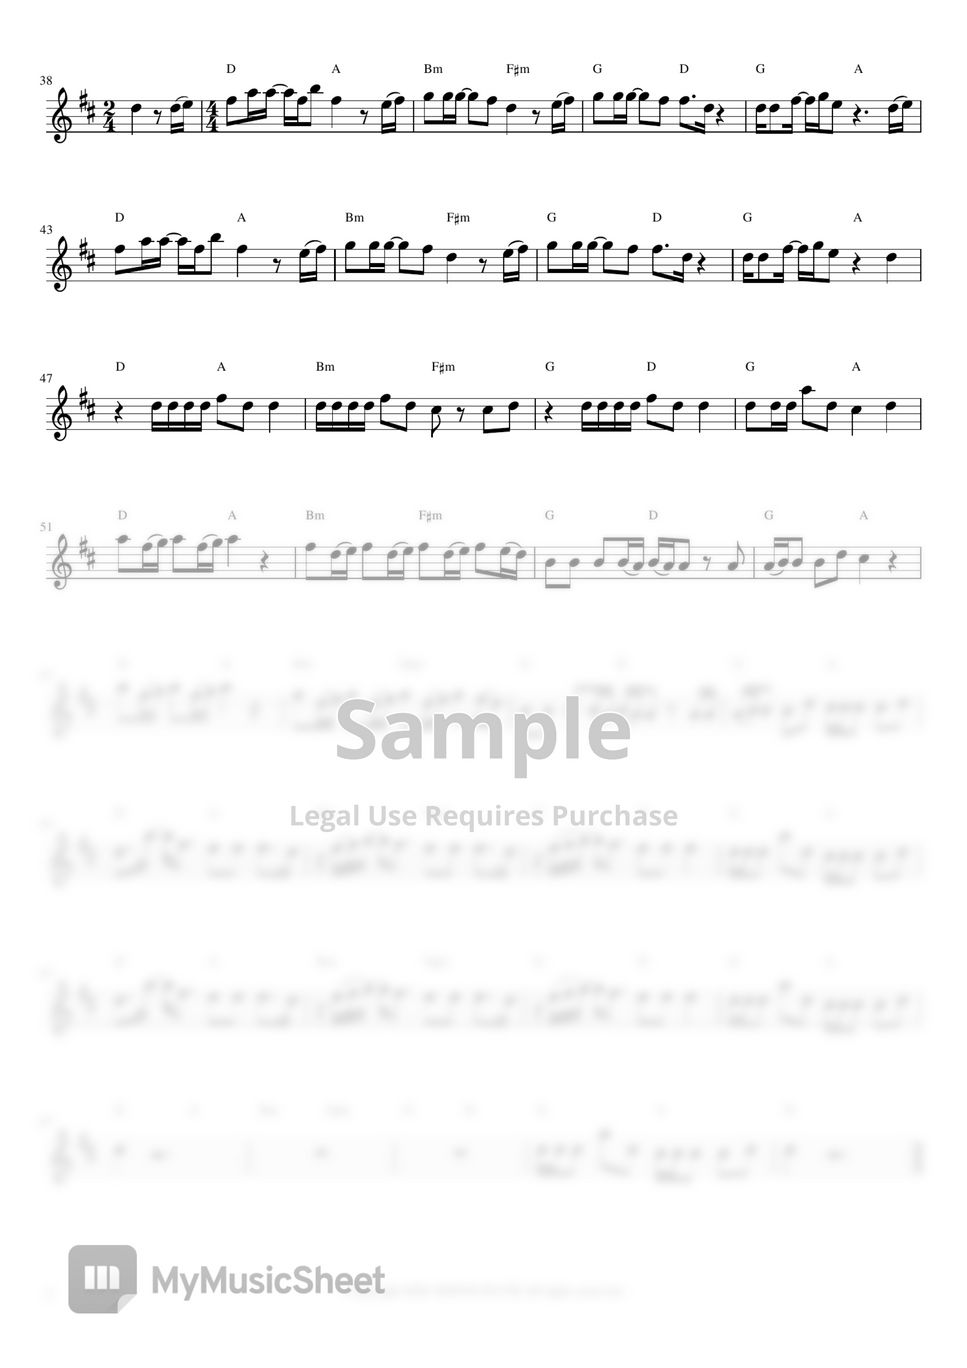 Maroon5(마룬 파이브) - Memories(메모리즈) D Major (Flute Sheet Music Easy) by SONYE FLUTE